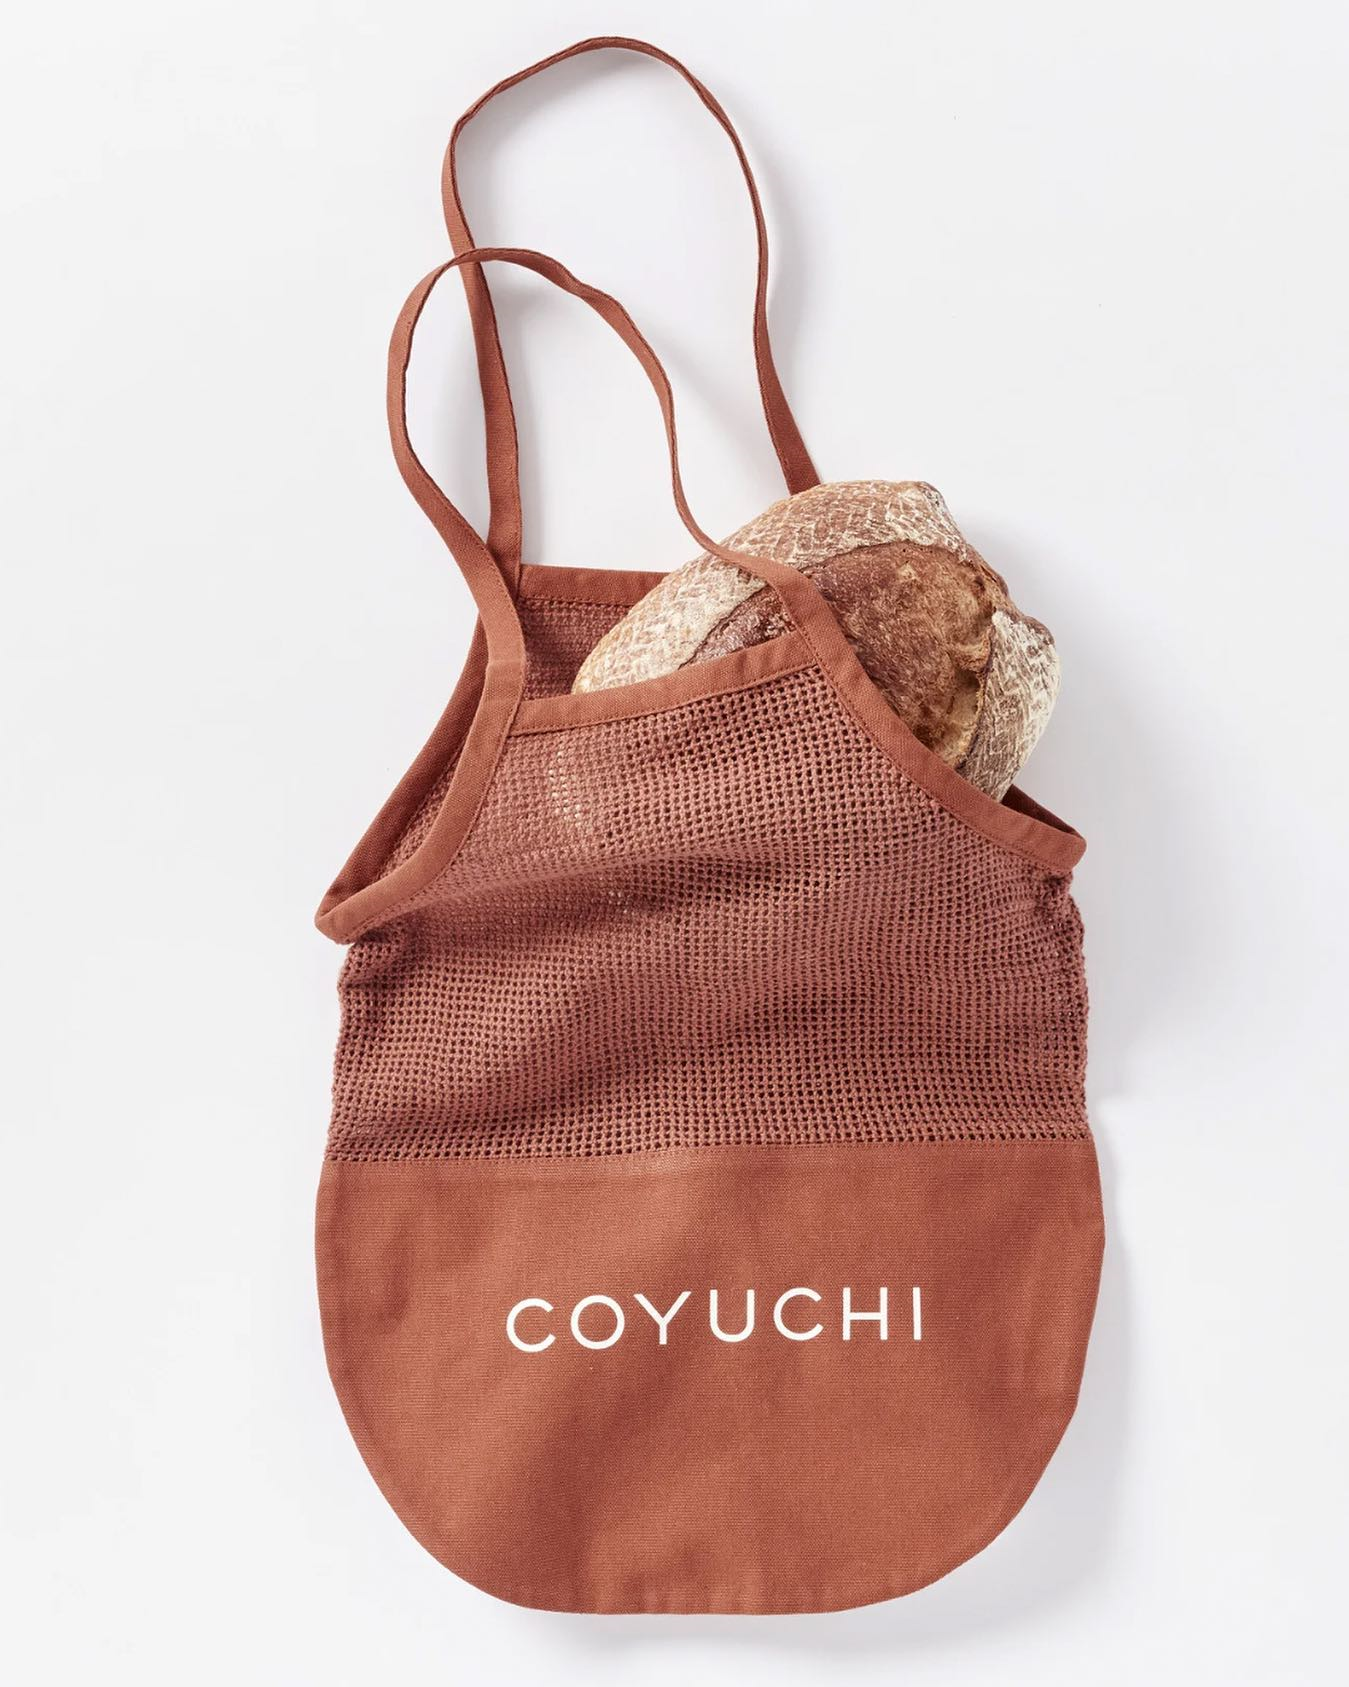 Coyuchi Tote Bag